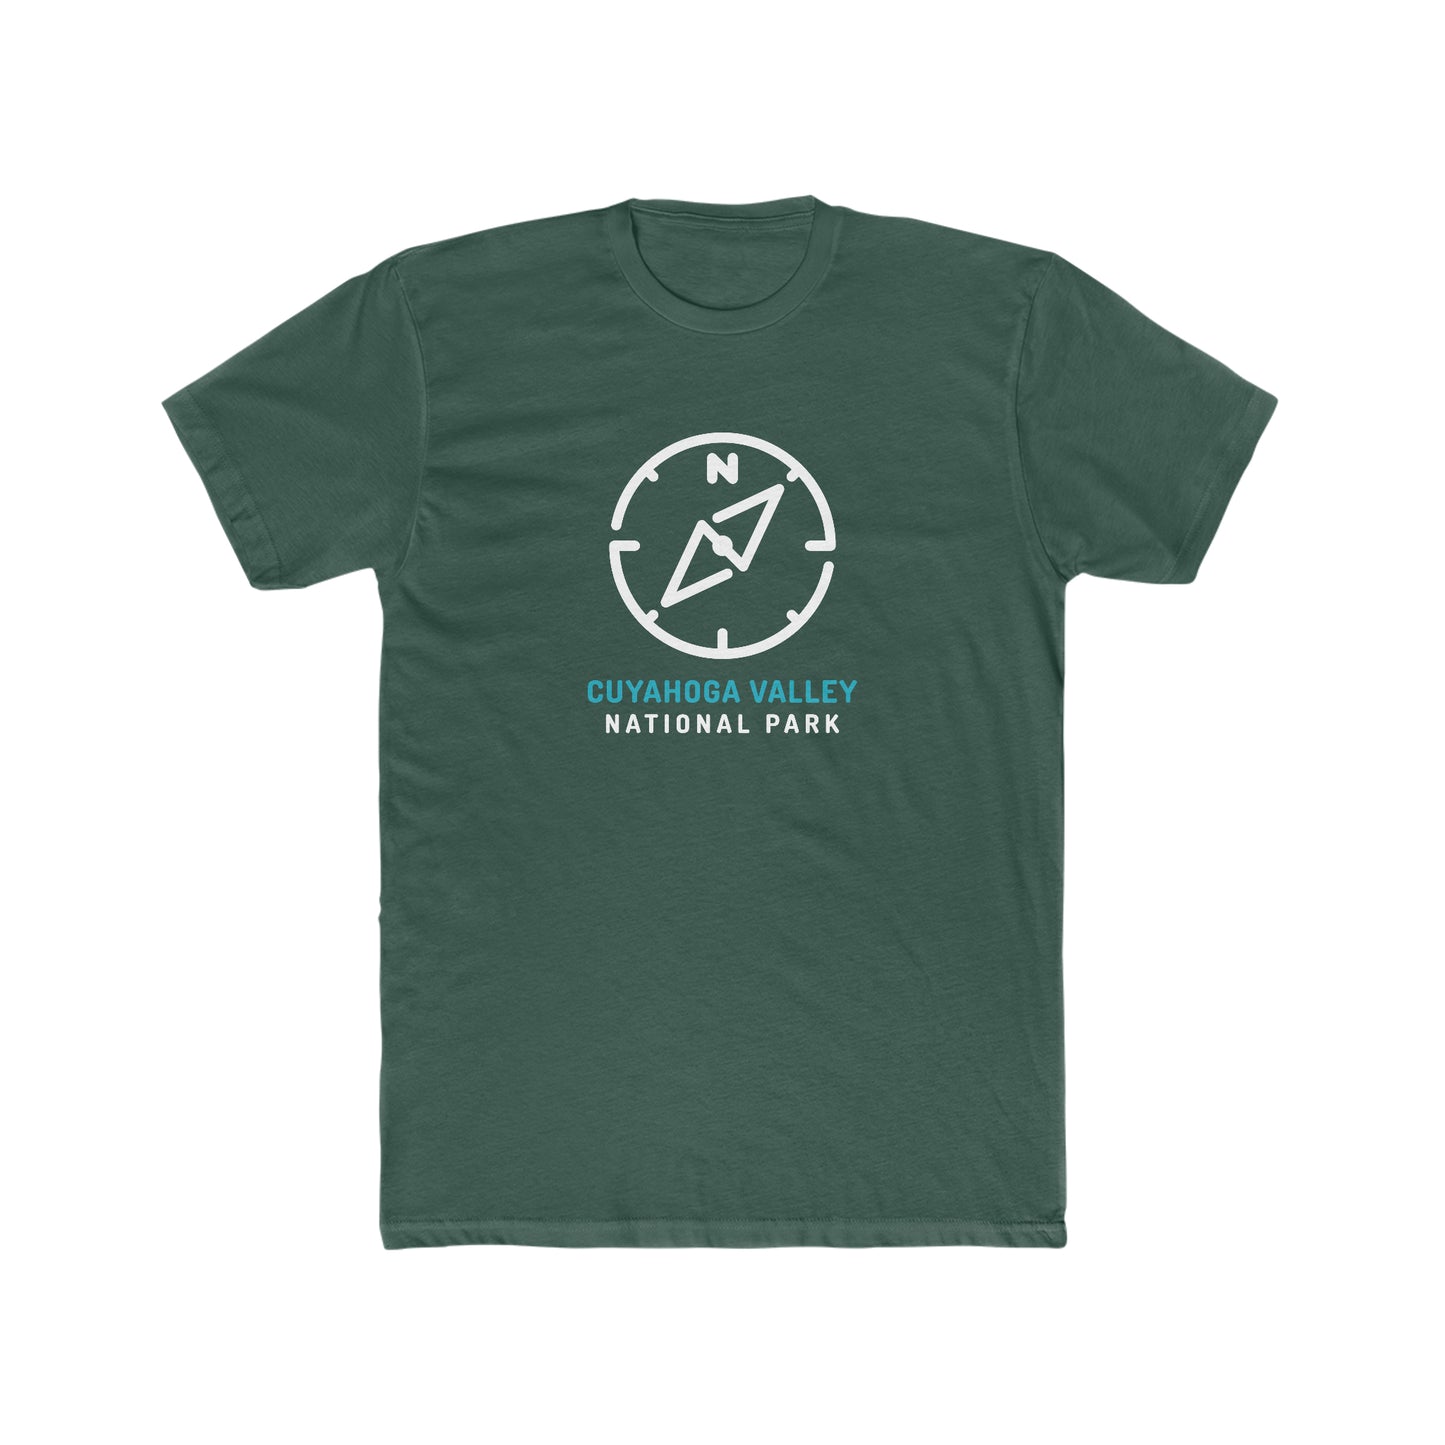 Cuyahoga Valley National Park T-Shirt Compass Design